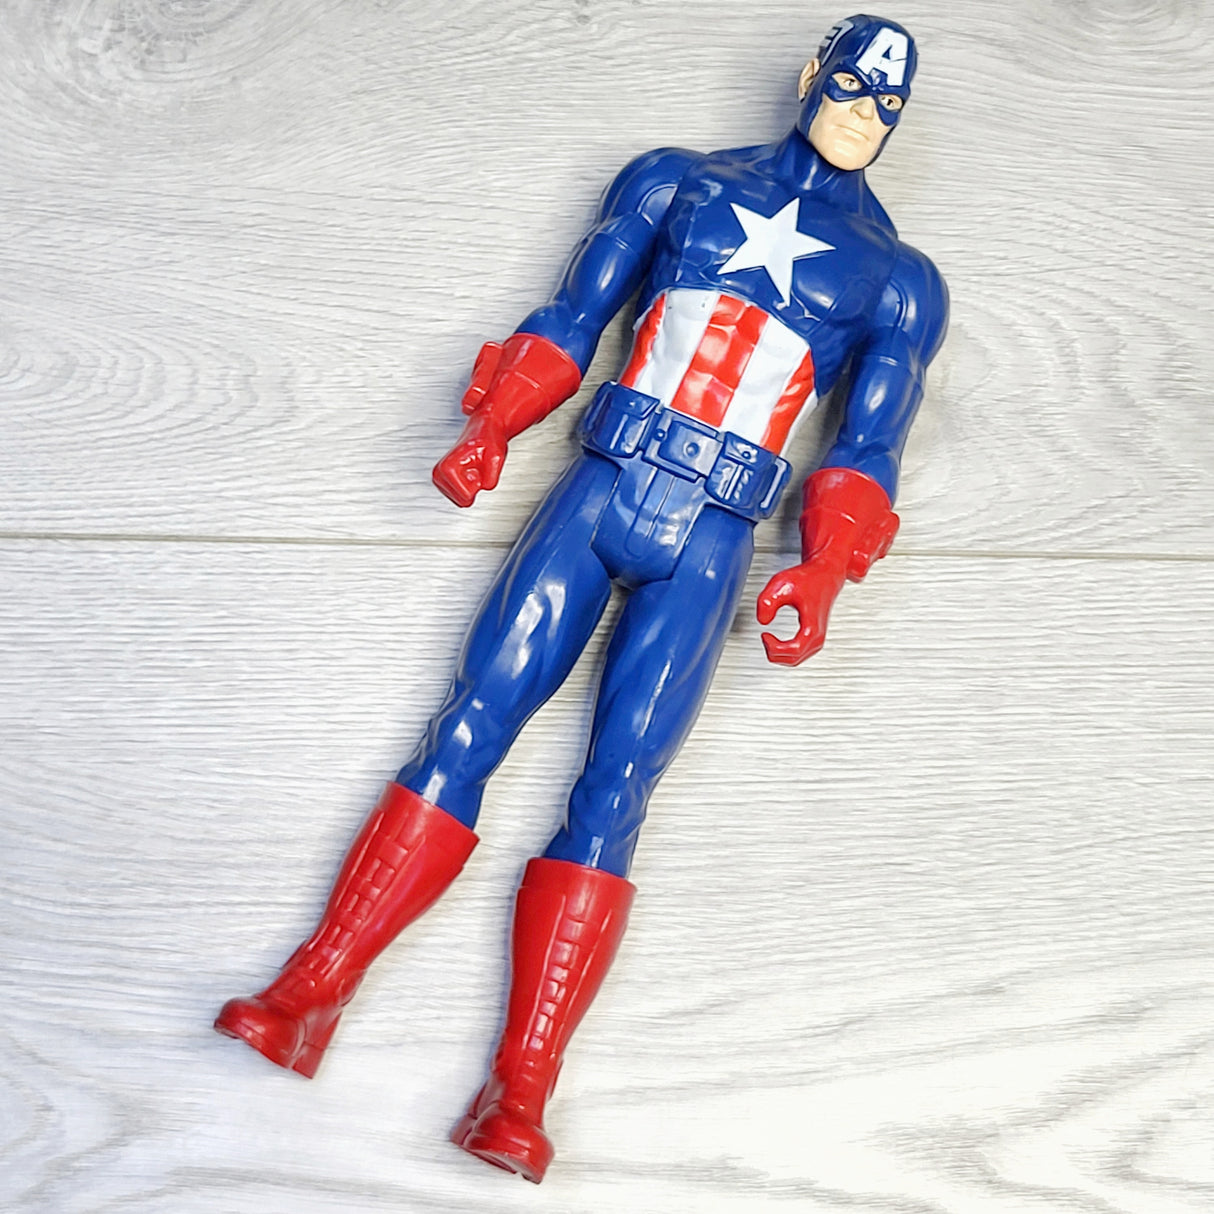 JHTC3 - Marvel Avengers 12 inch Captain American action figure